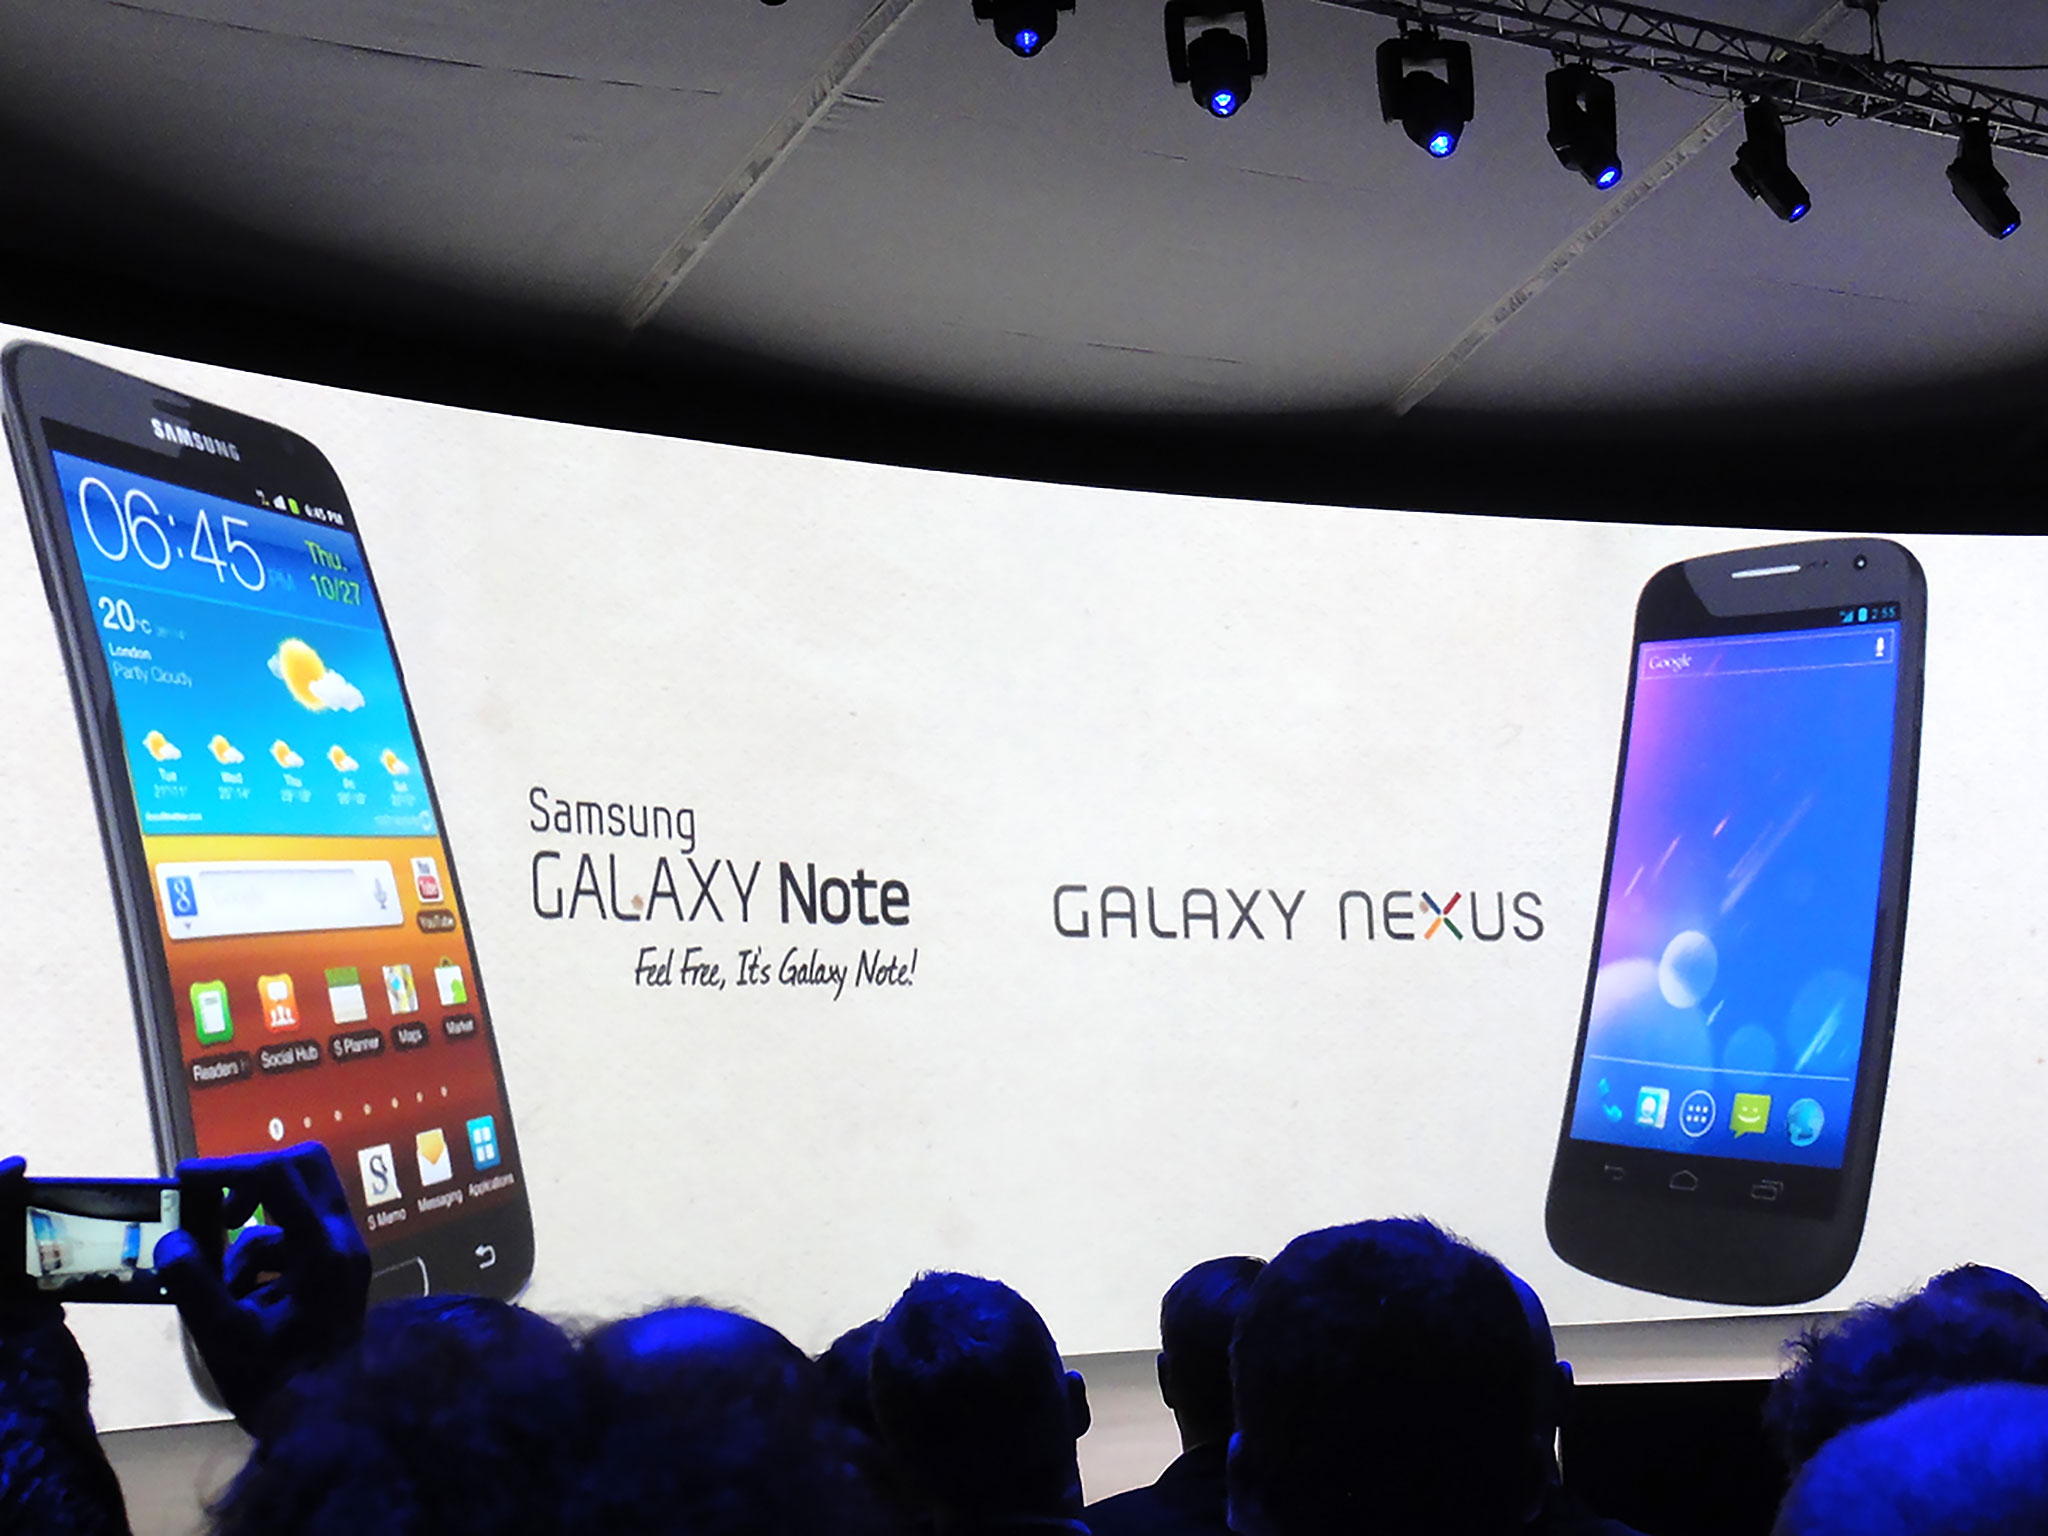 Galaxy Nexus Galaxy Note launch event